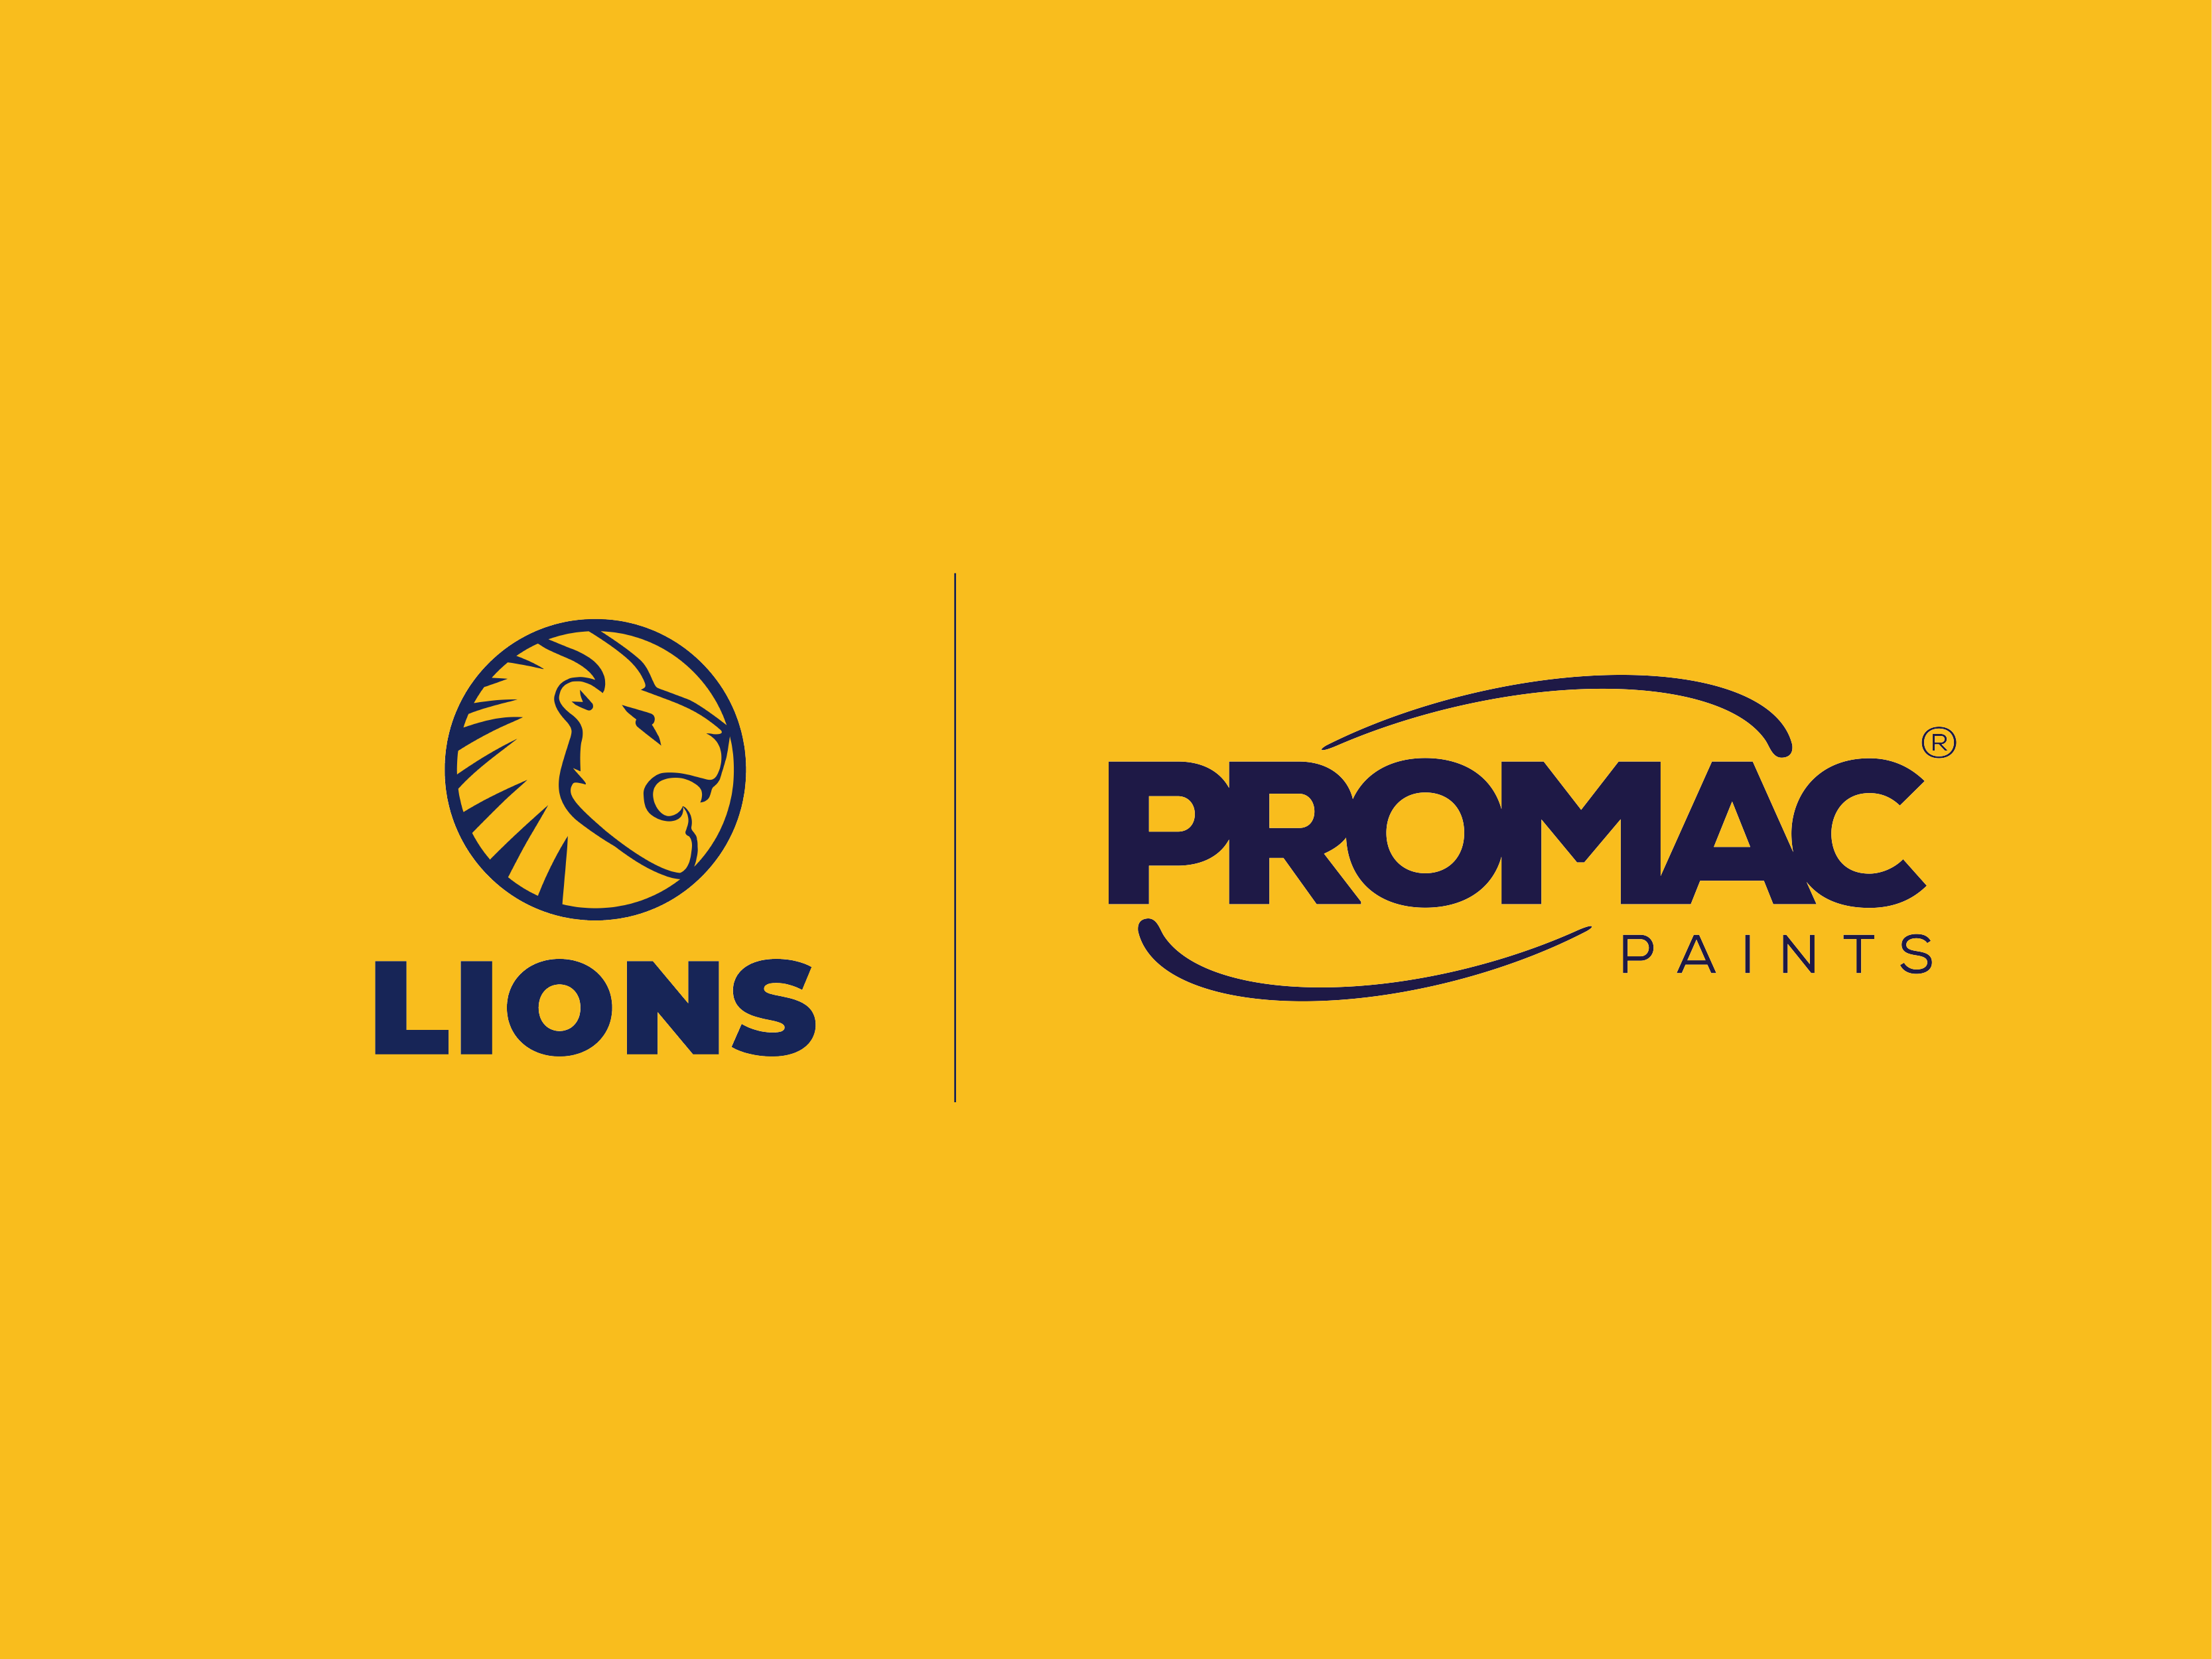 Lion Pirates Esport Mascot Logo Design royalty free illustration